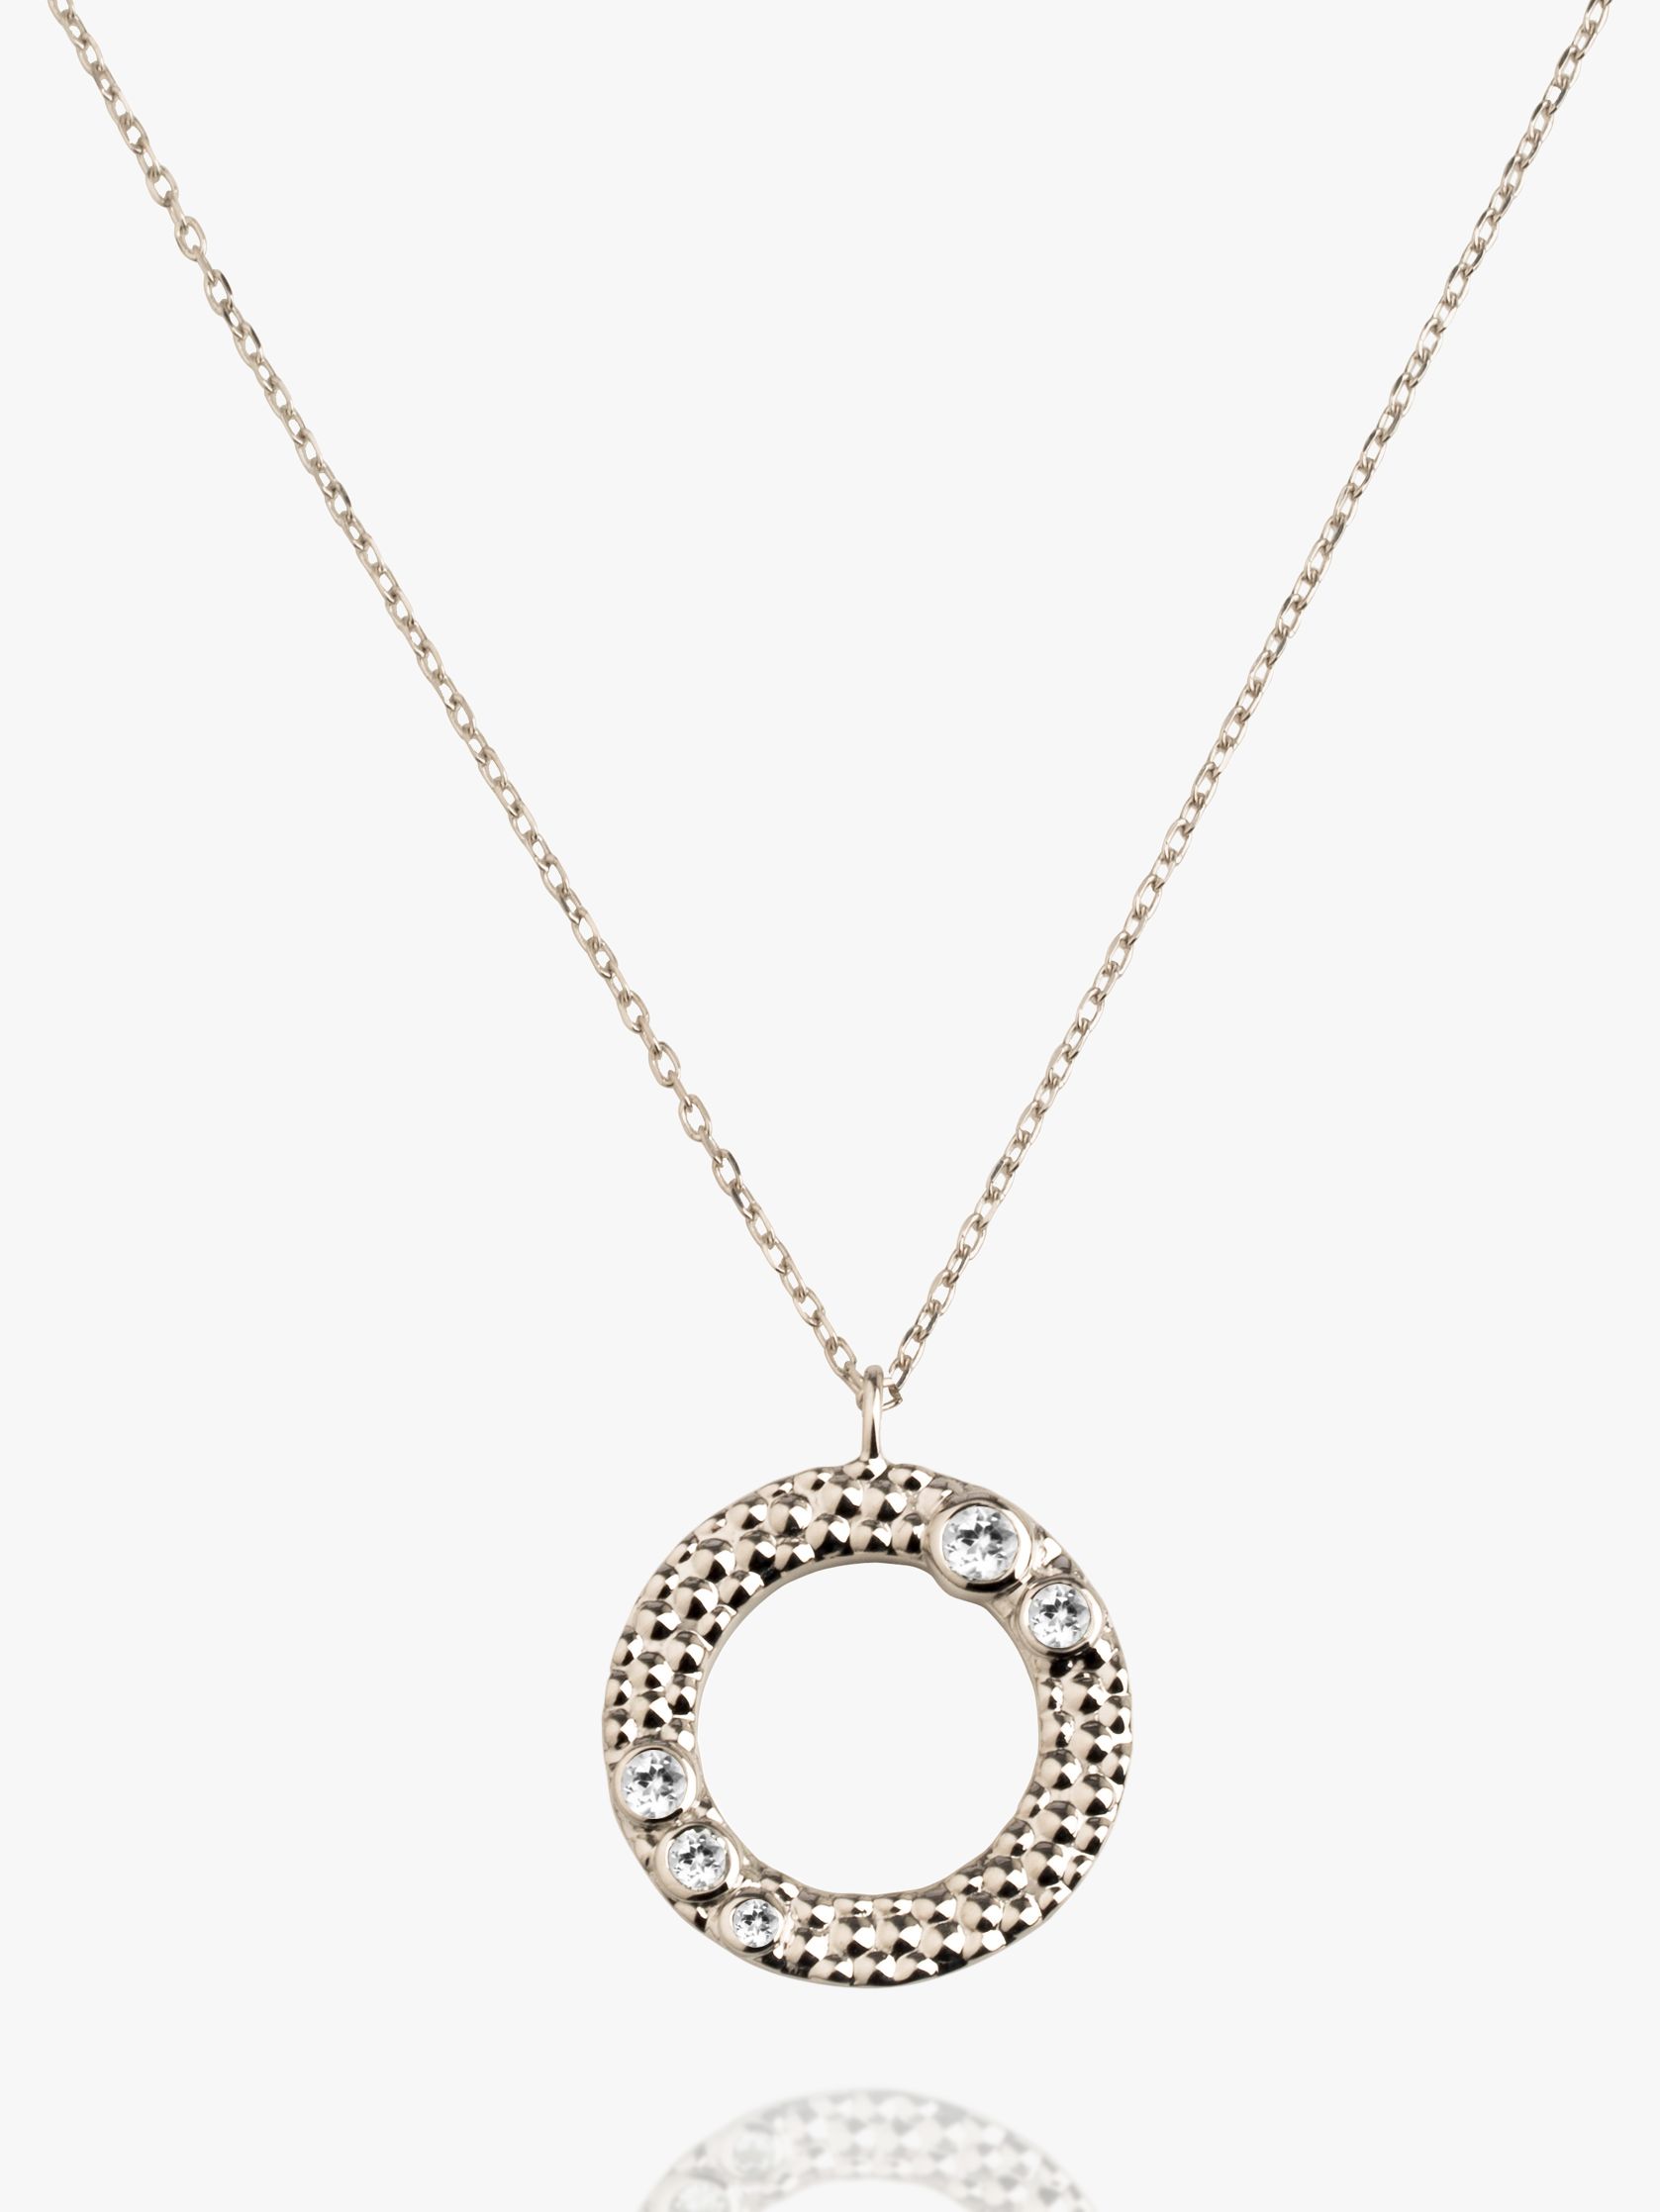 Emily Mortimer Jewellery Wanderlust Round Pendant Necklace